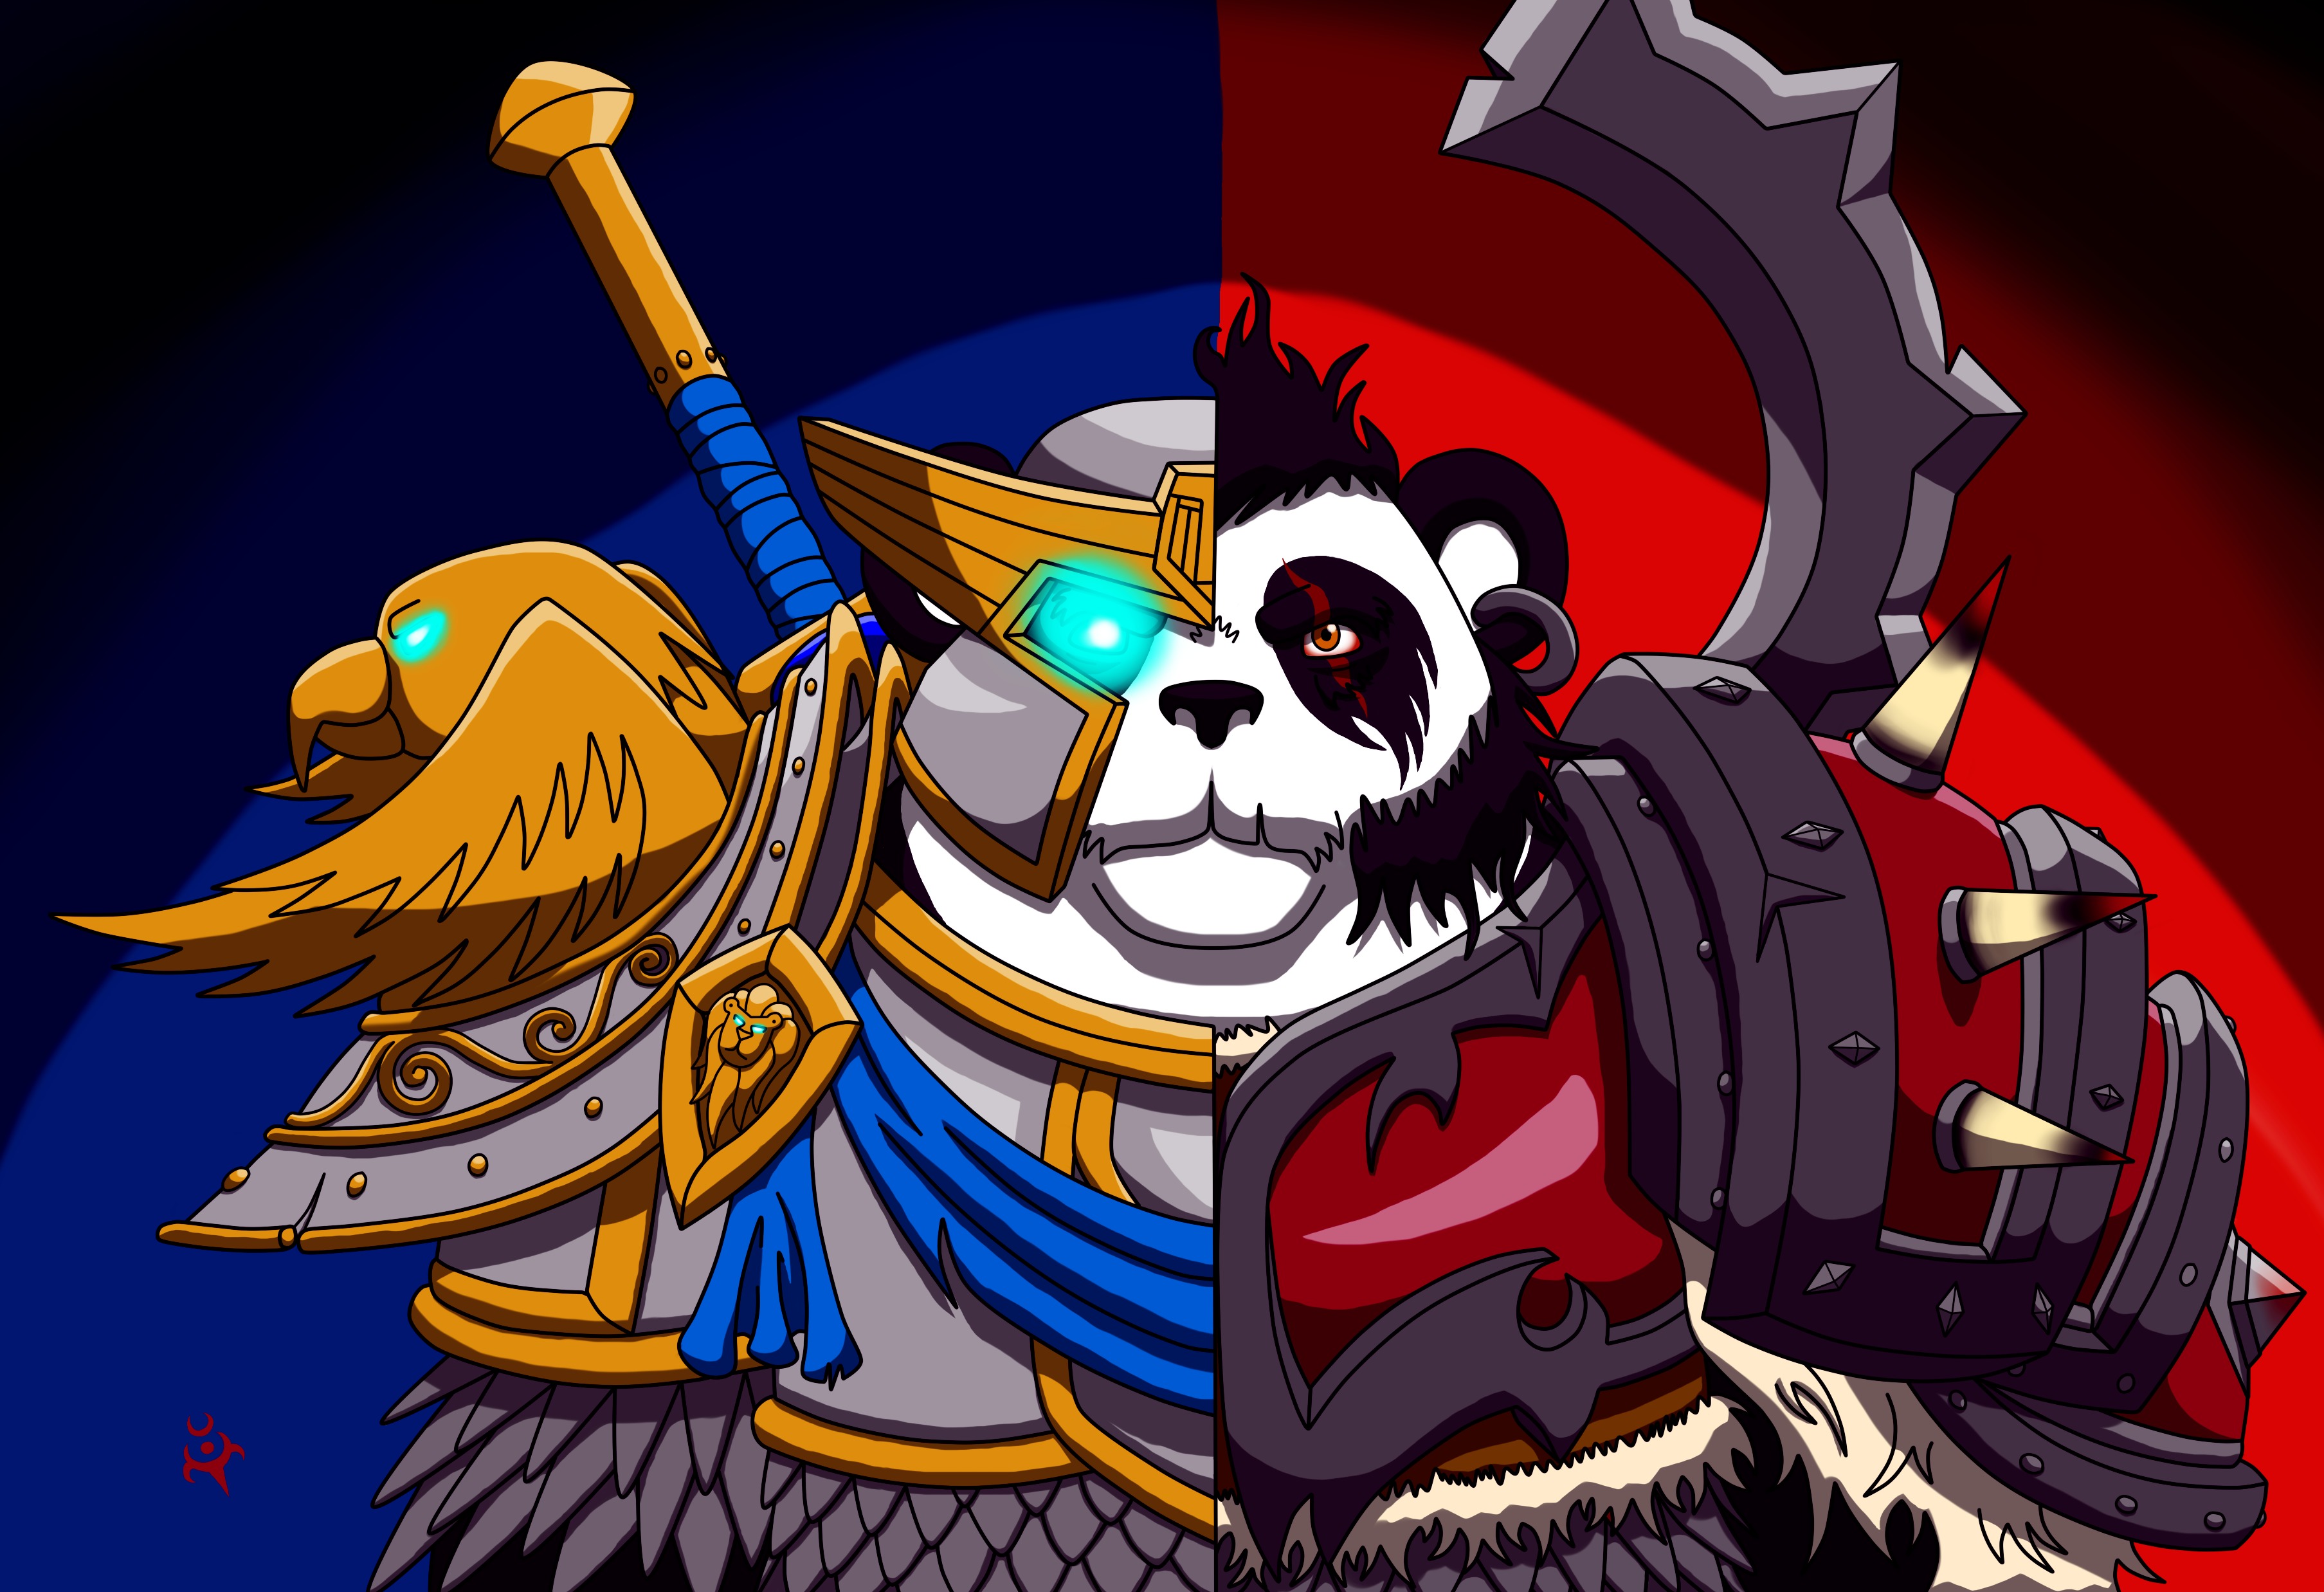 Wallpaper World of Warcraft Mists of Pandaria, Cartoon, Animated Cartoon,  Illustration, Fiction, Background - Download Free Image